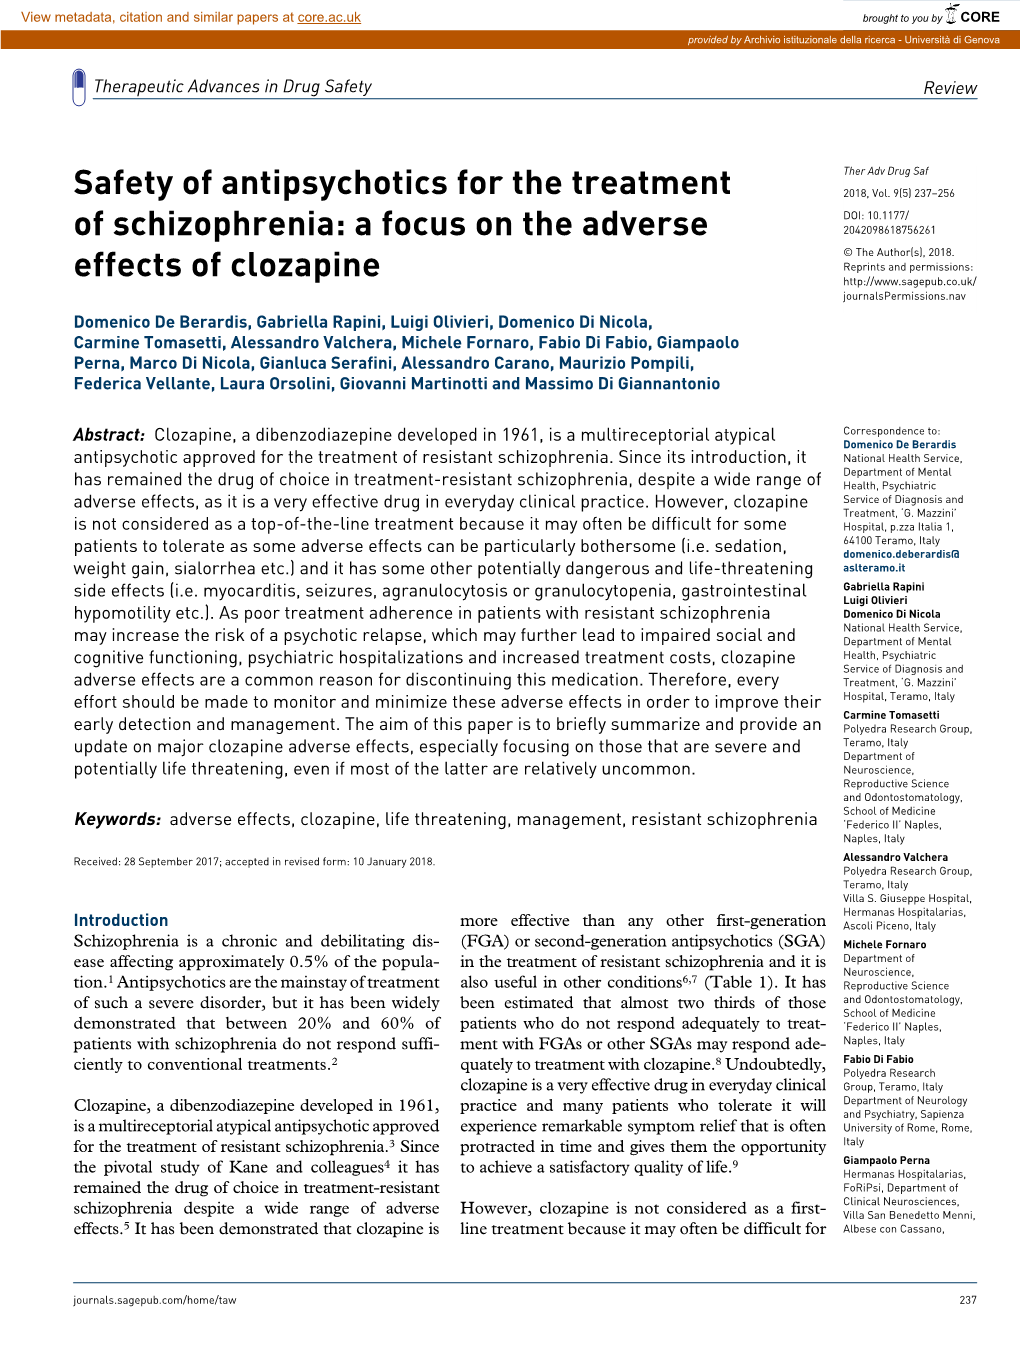 Safety of Antipsychotics for the Treatment of Schizophrenia